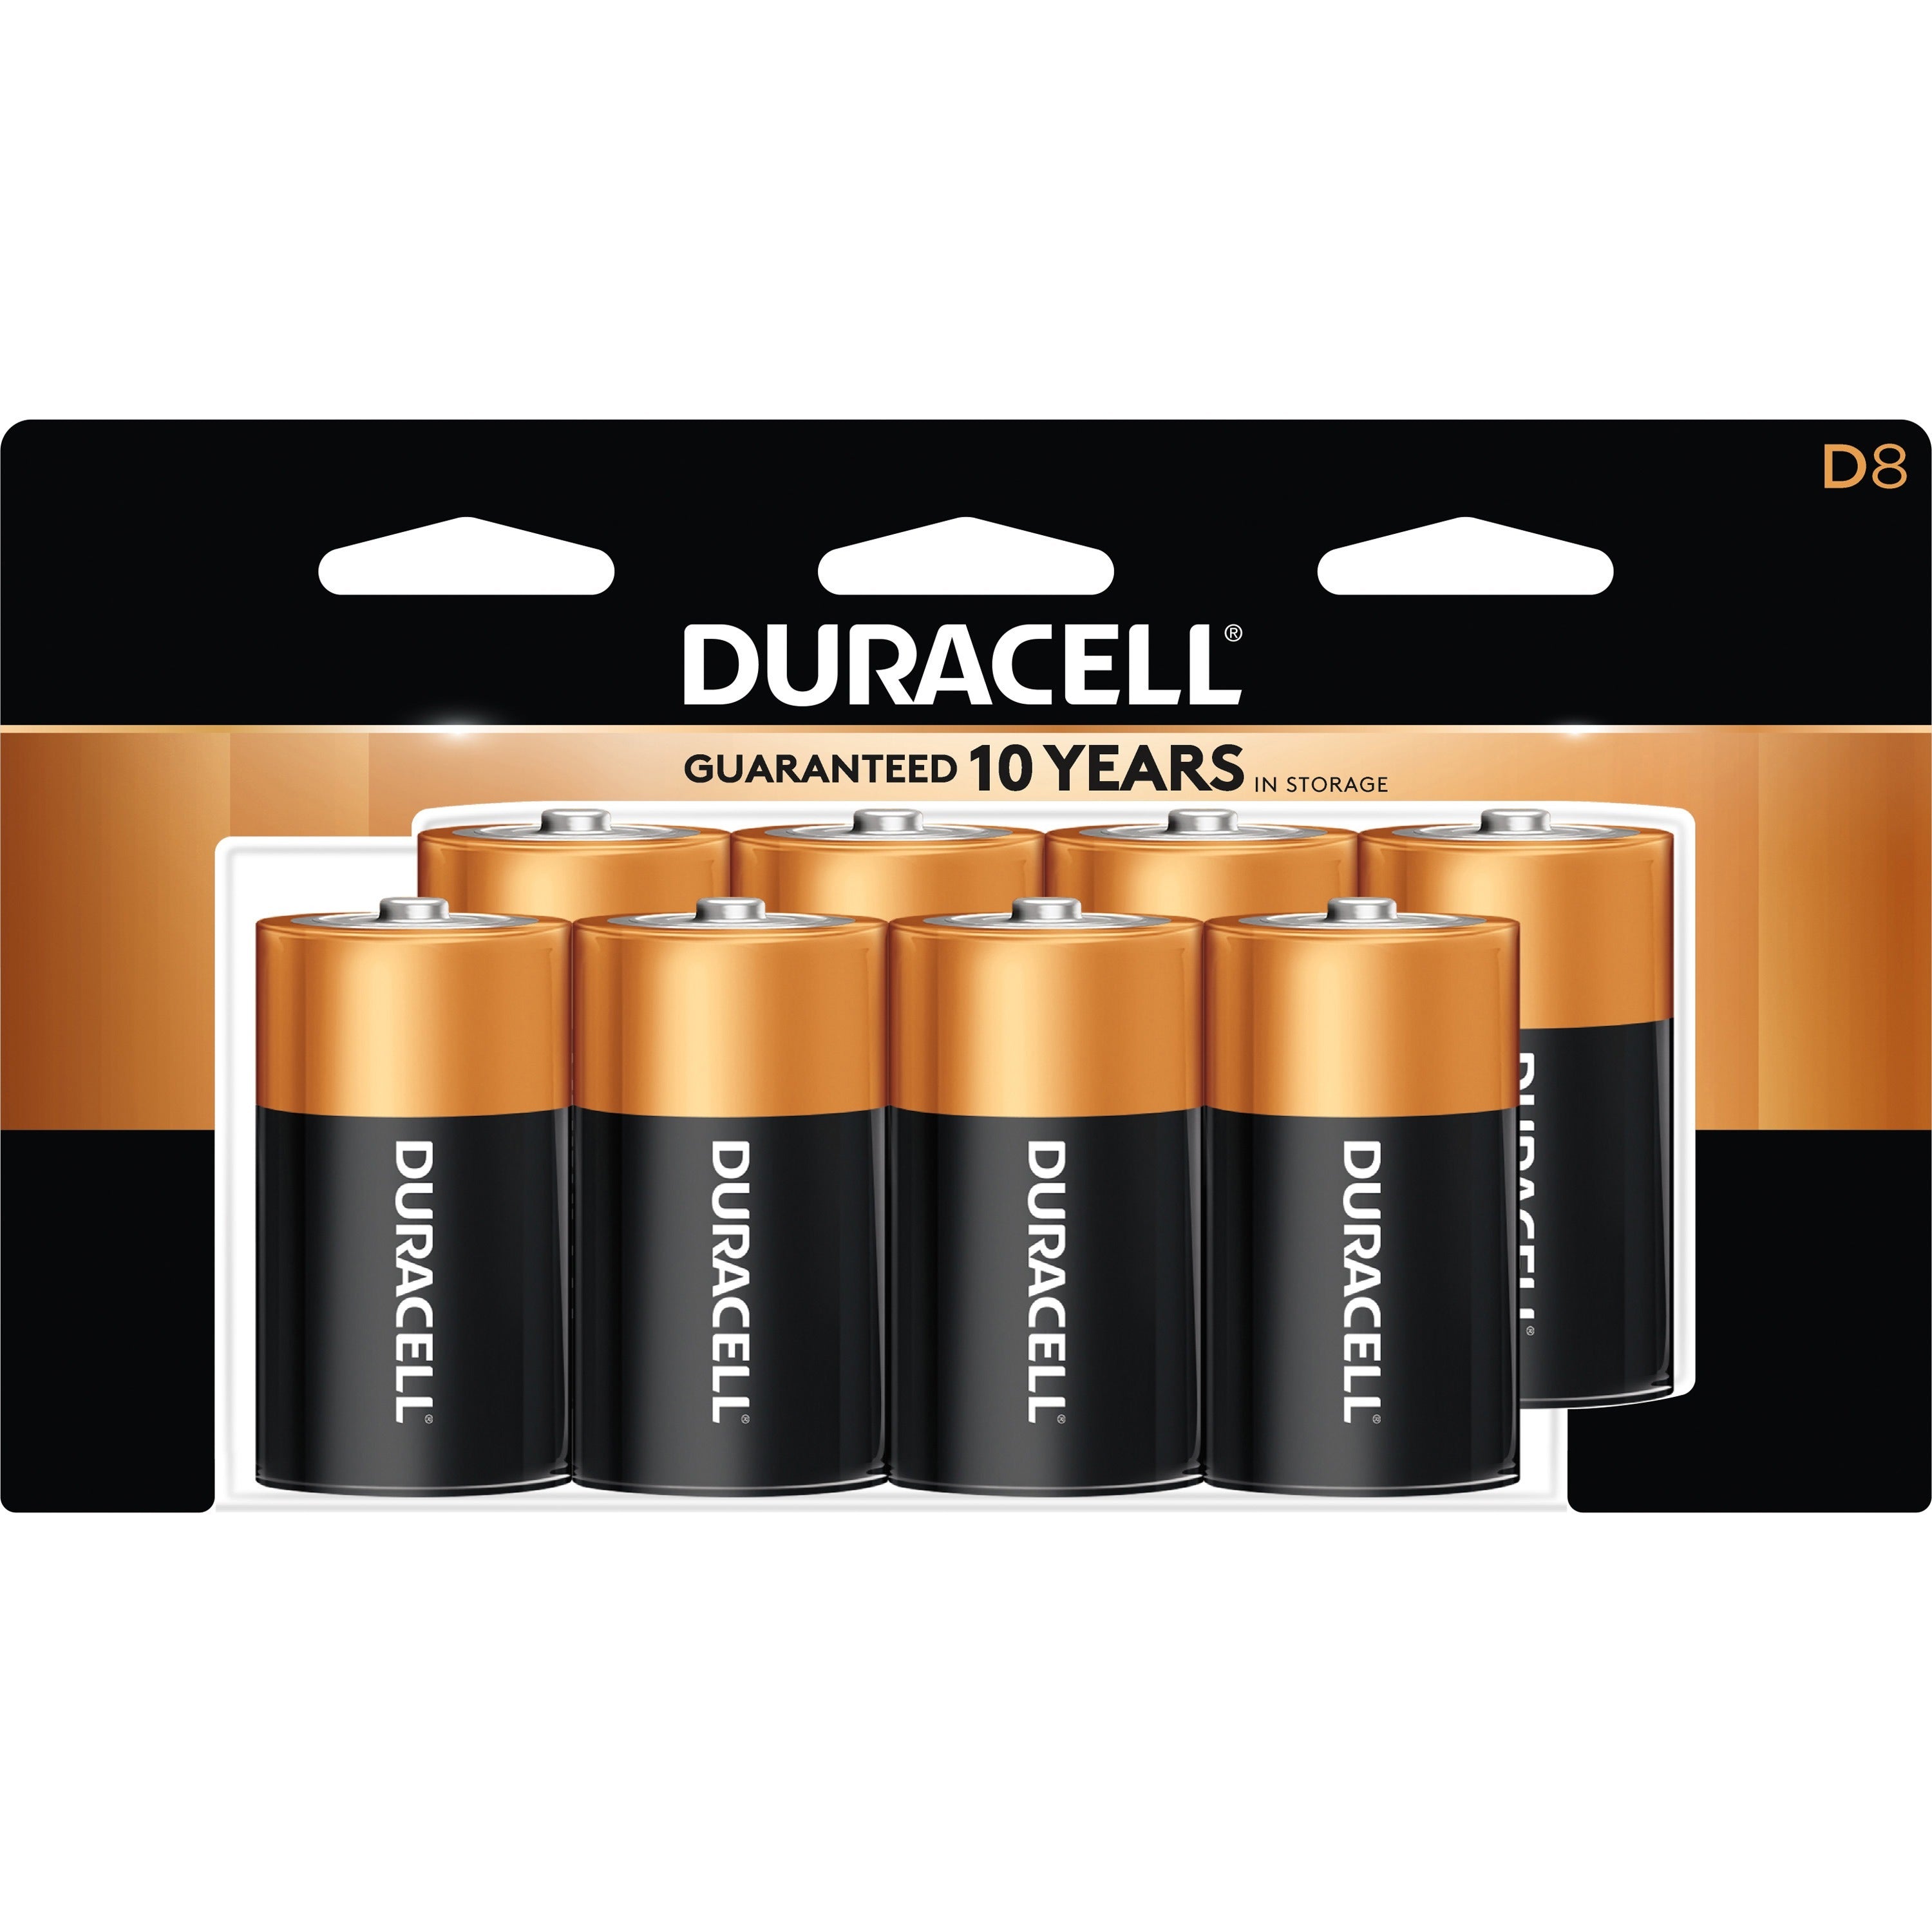 duracell-coppertop-alkaline-d-battery-8-packs-for-multipurpose-d-15-v-dc-96-carton_durmn13rt8zct - 1